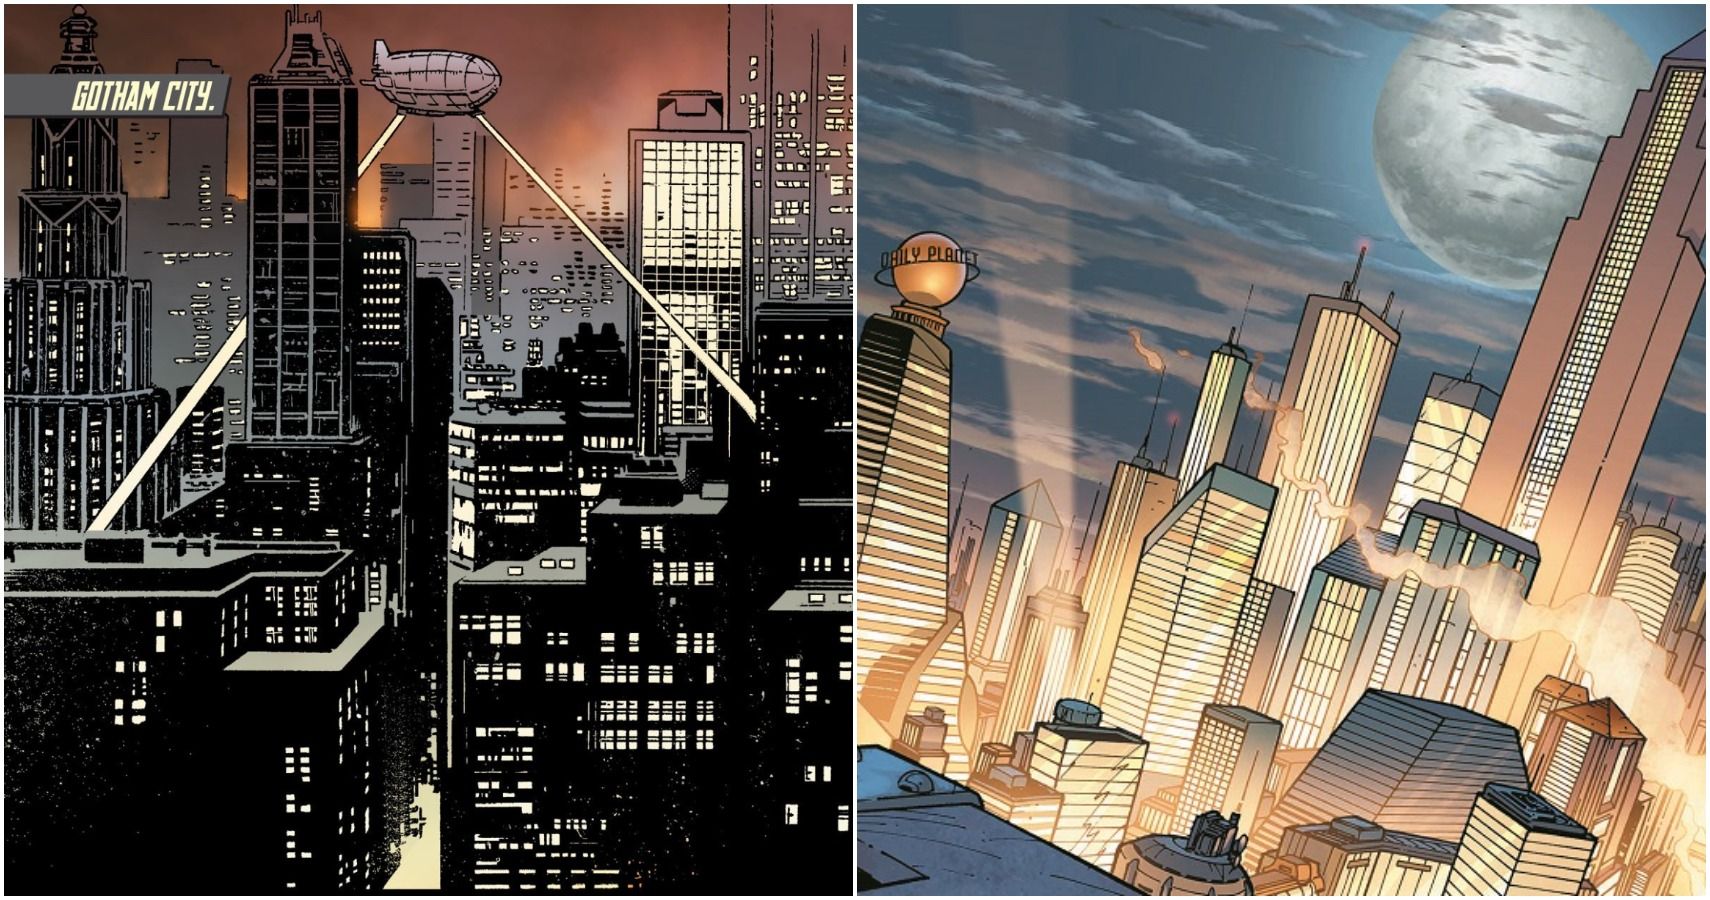 Where is Gotham City?